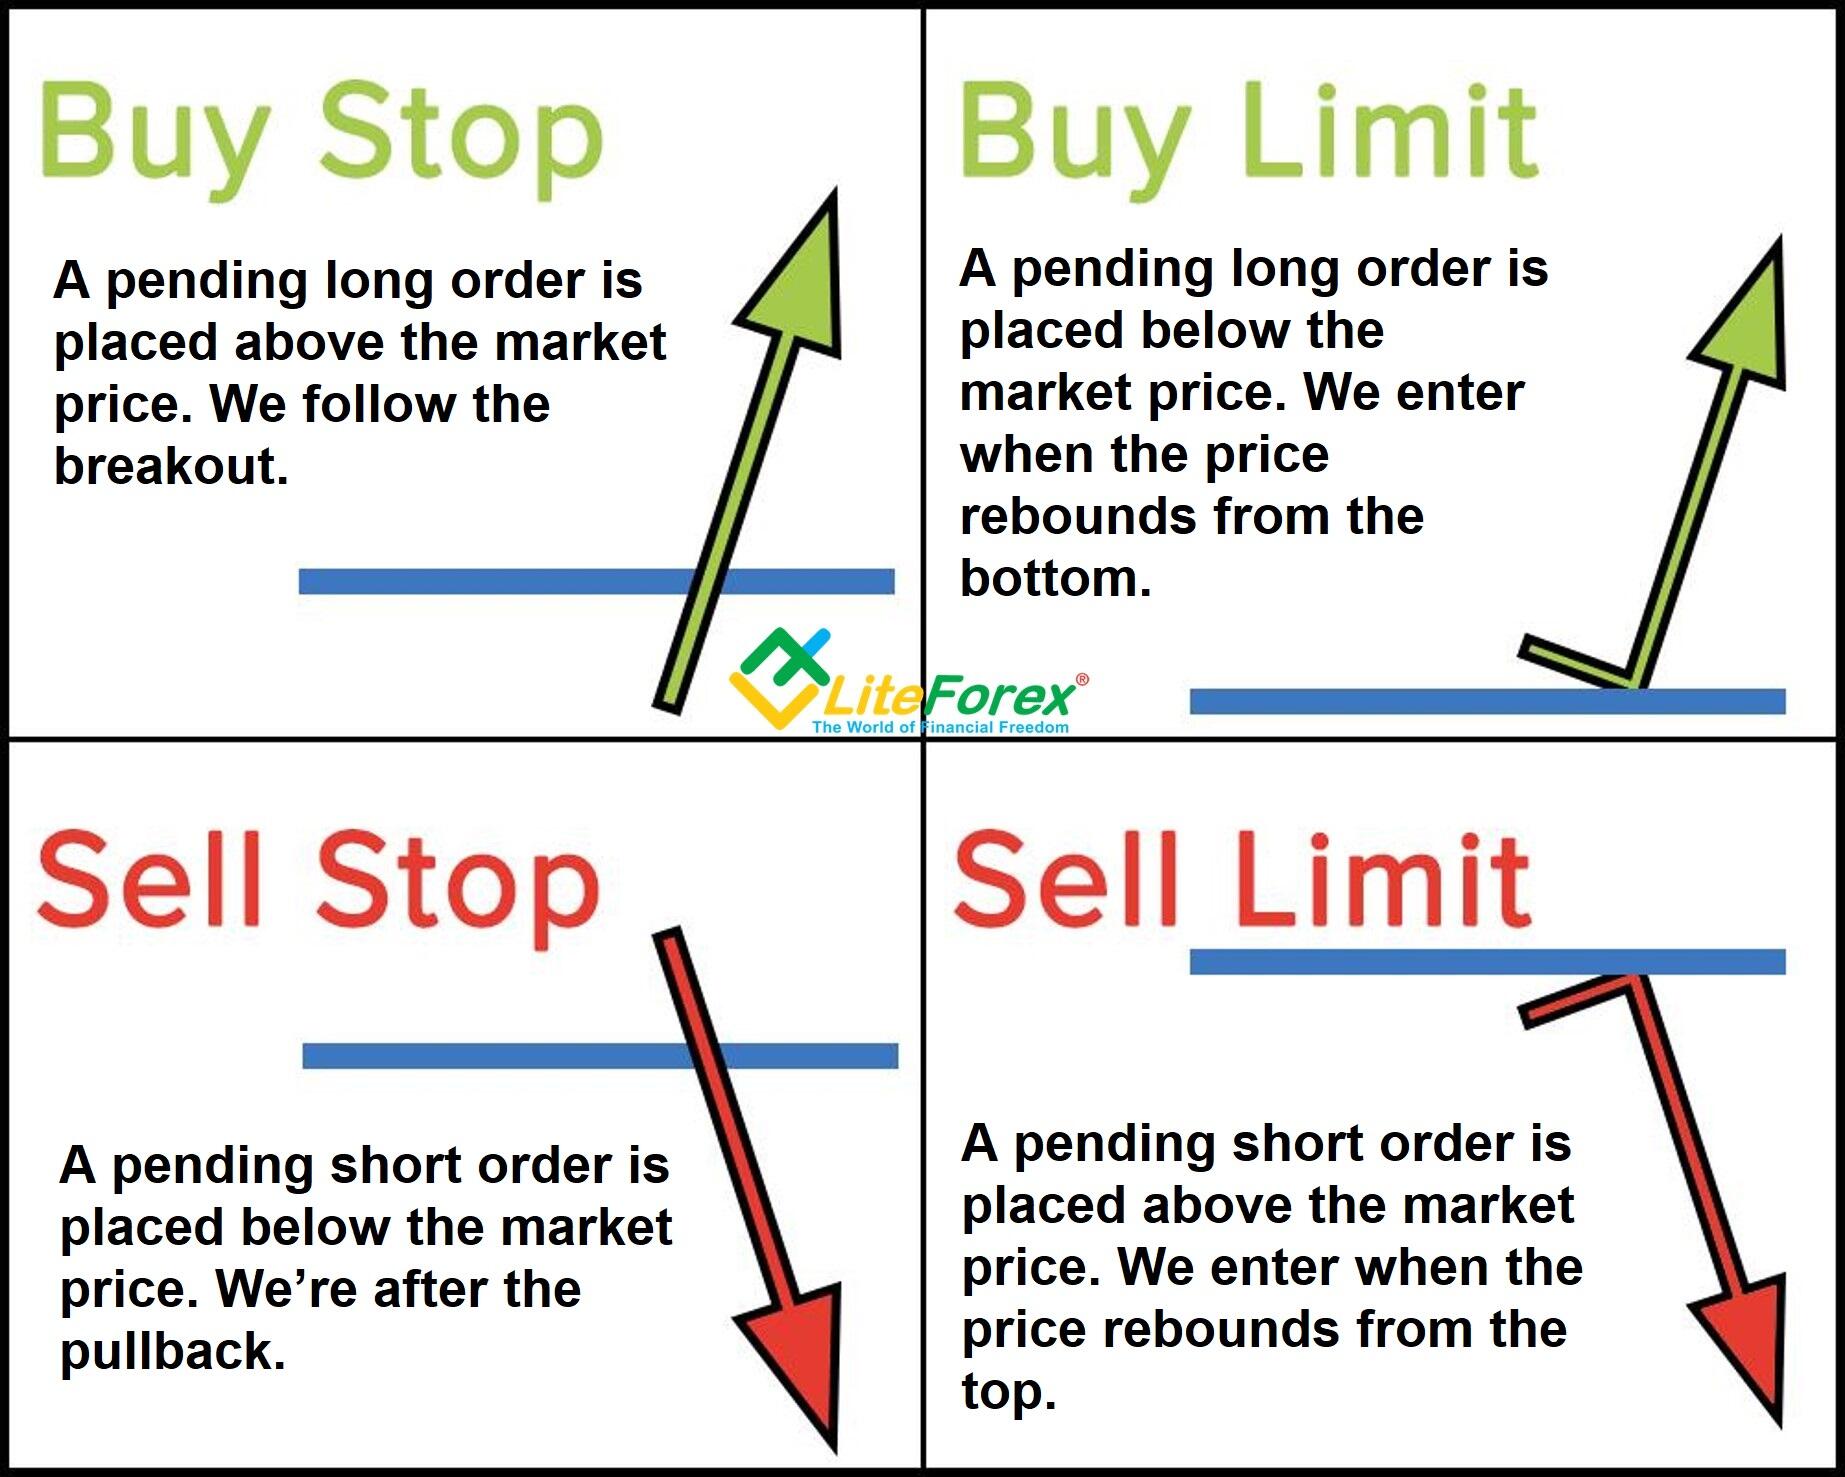 buy stop vs buy limit forexworld